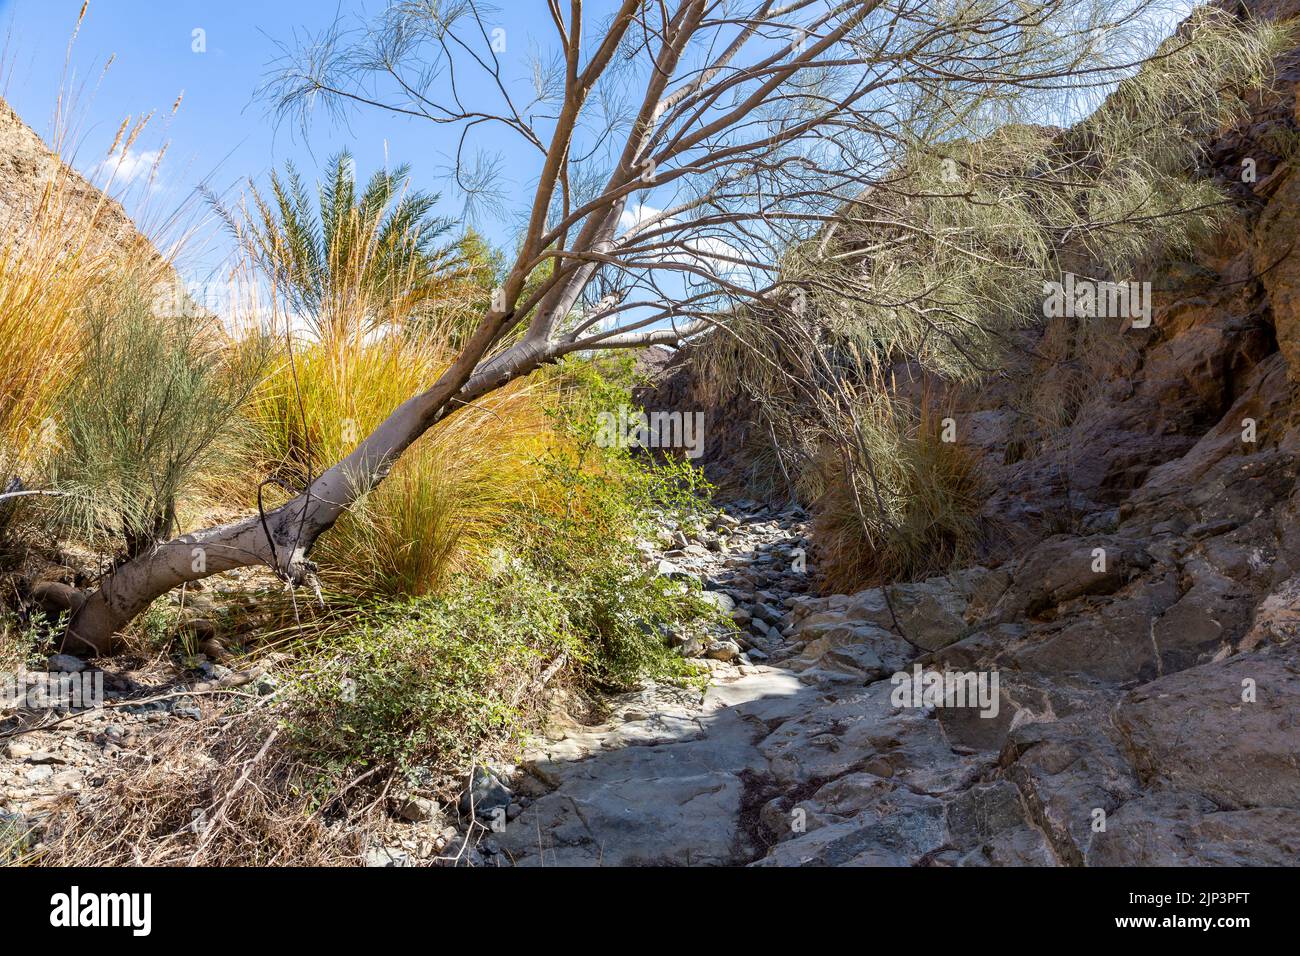 Stony hiking trail through dry riverbed of Wadi Shawka, with green vegetation, grass and palm trees, Hajar Mountains, United Arab Emirates. Stock Photo